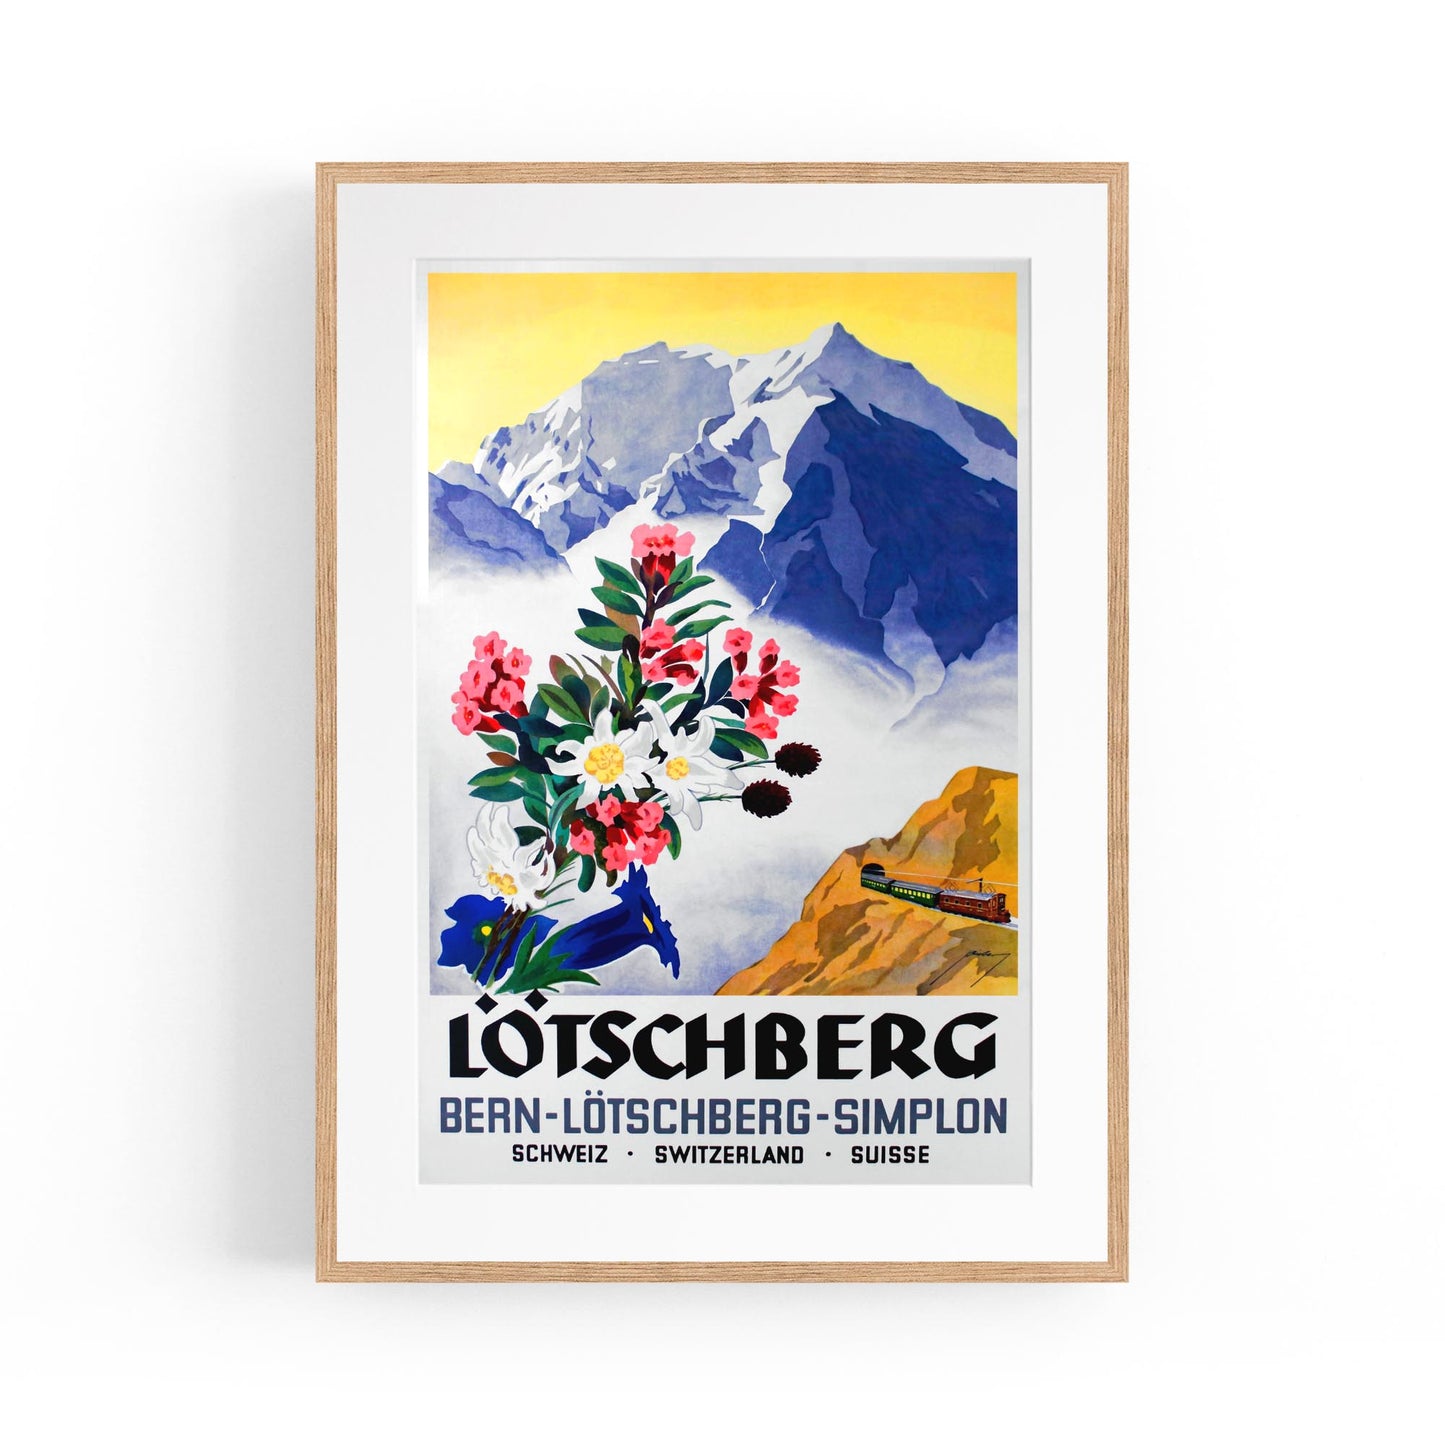 Lotschberg, Switzerland by Armin Bieber | Framed Vintage Travel Poster